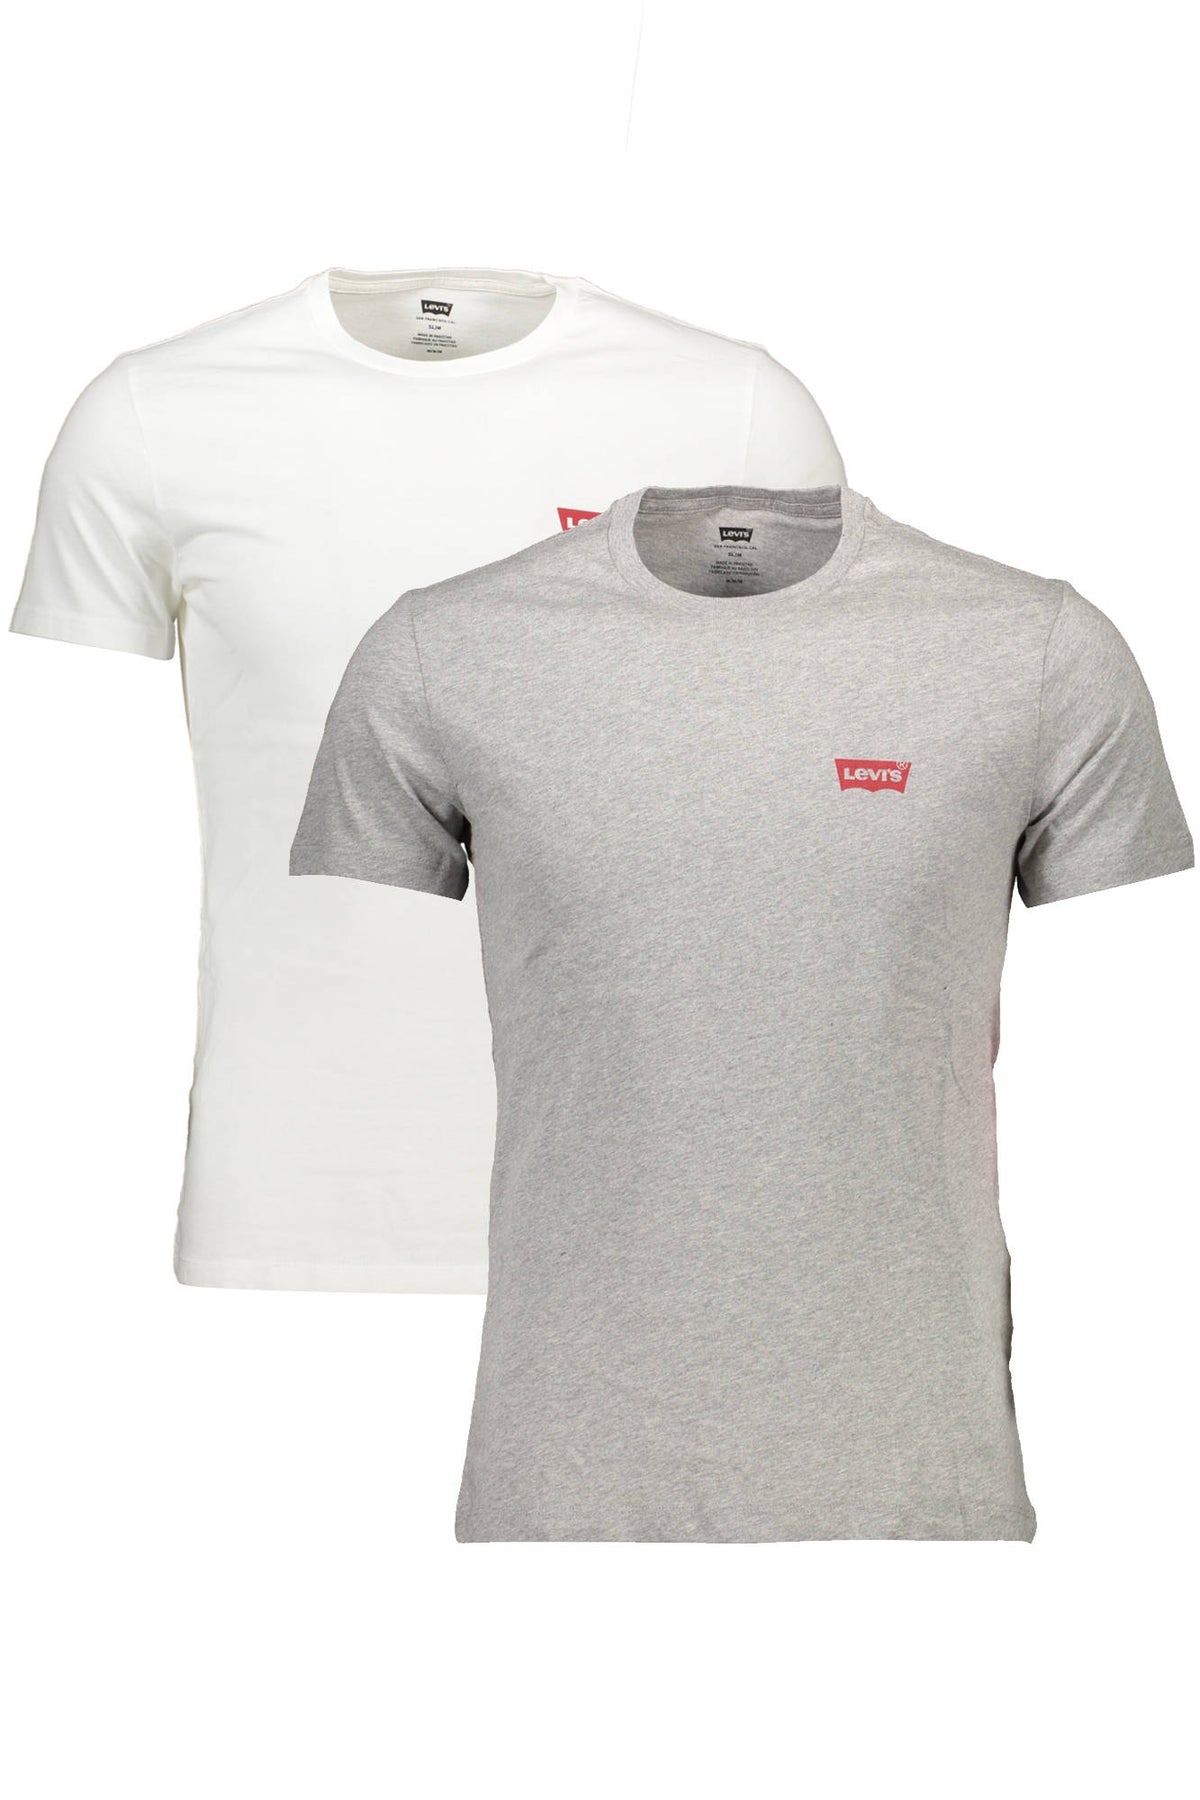 LEVI'S Herren T-Shirt Shirt Sweatshirt Oberteil mit Rundhalsausschnitt, kurzärmlig